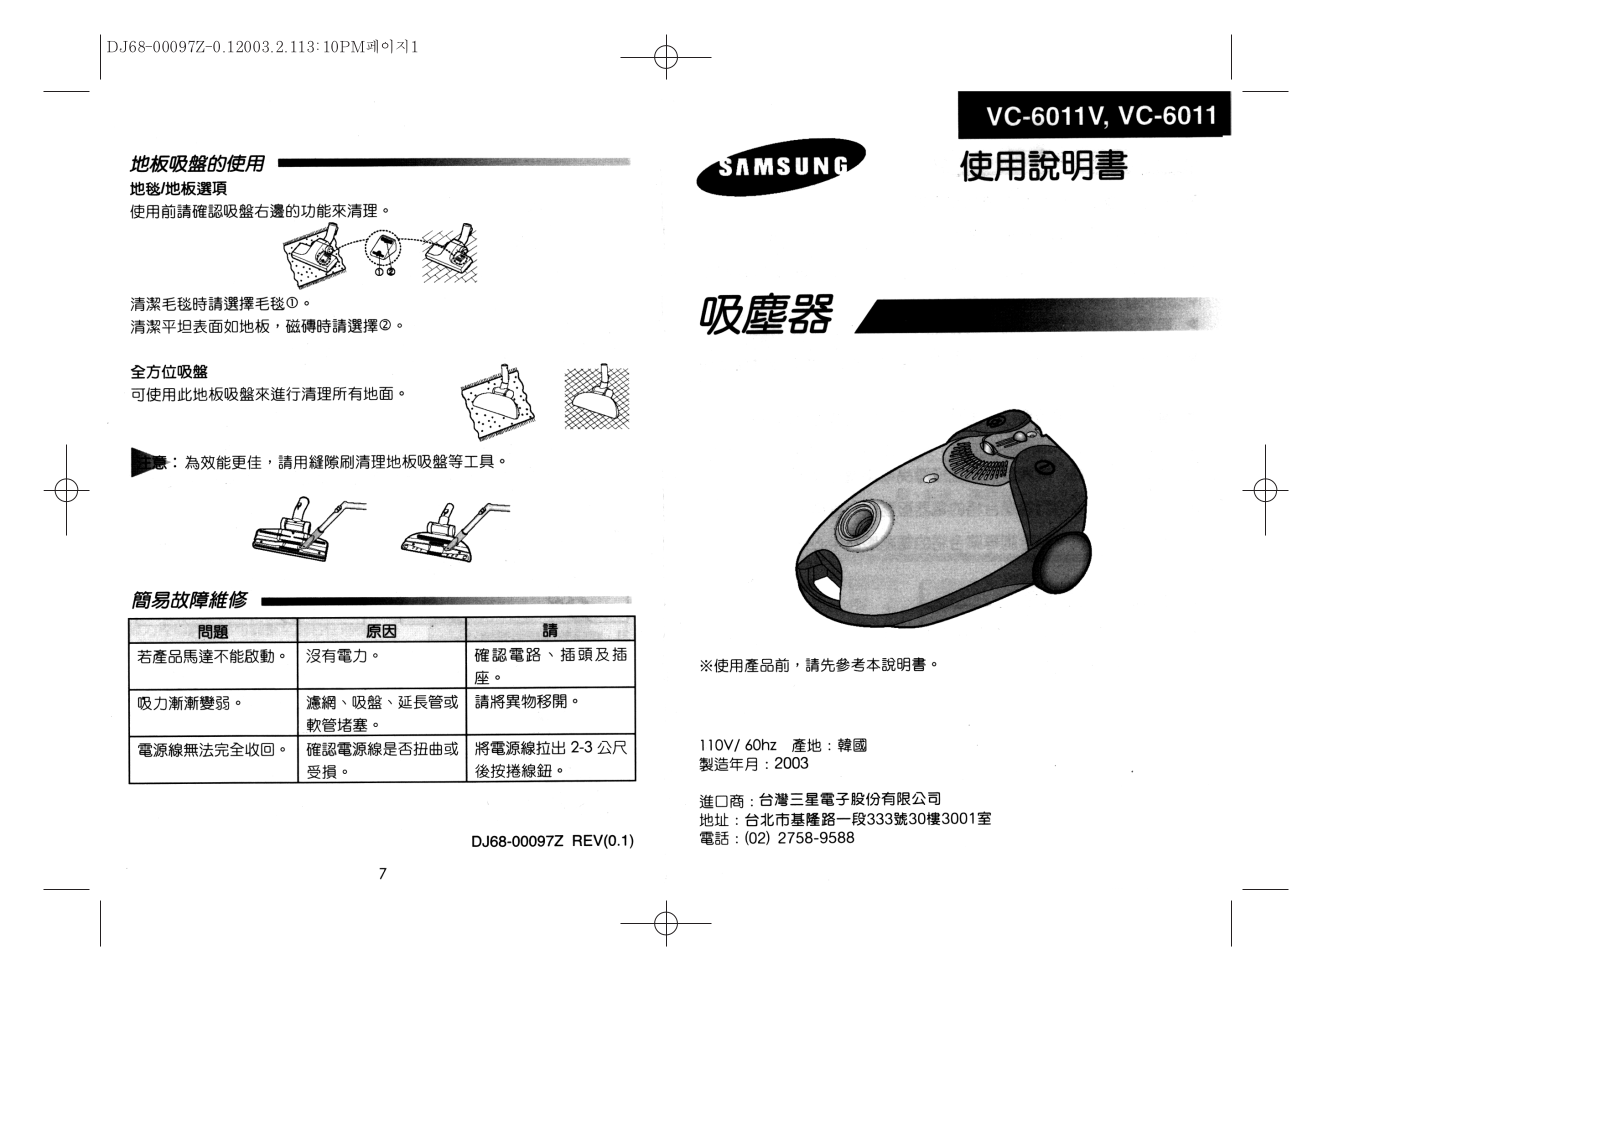 Samsung VC-6011 User Manual